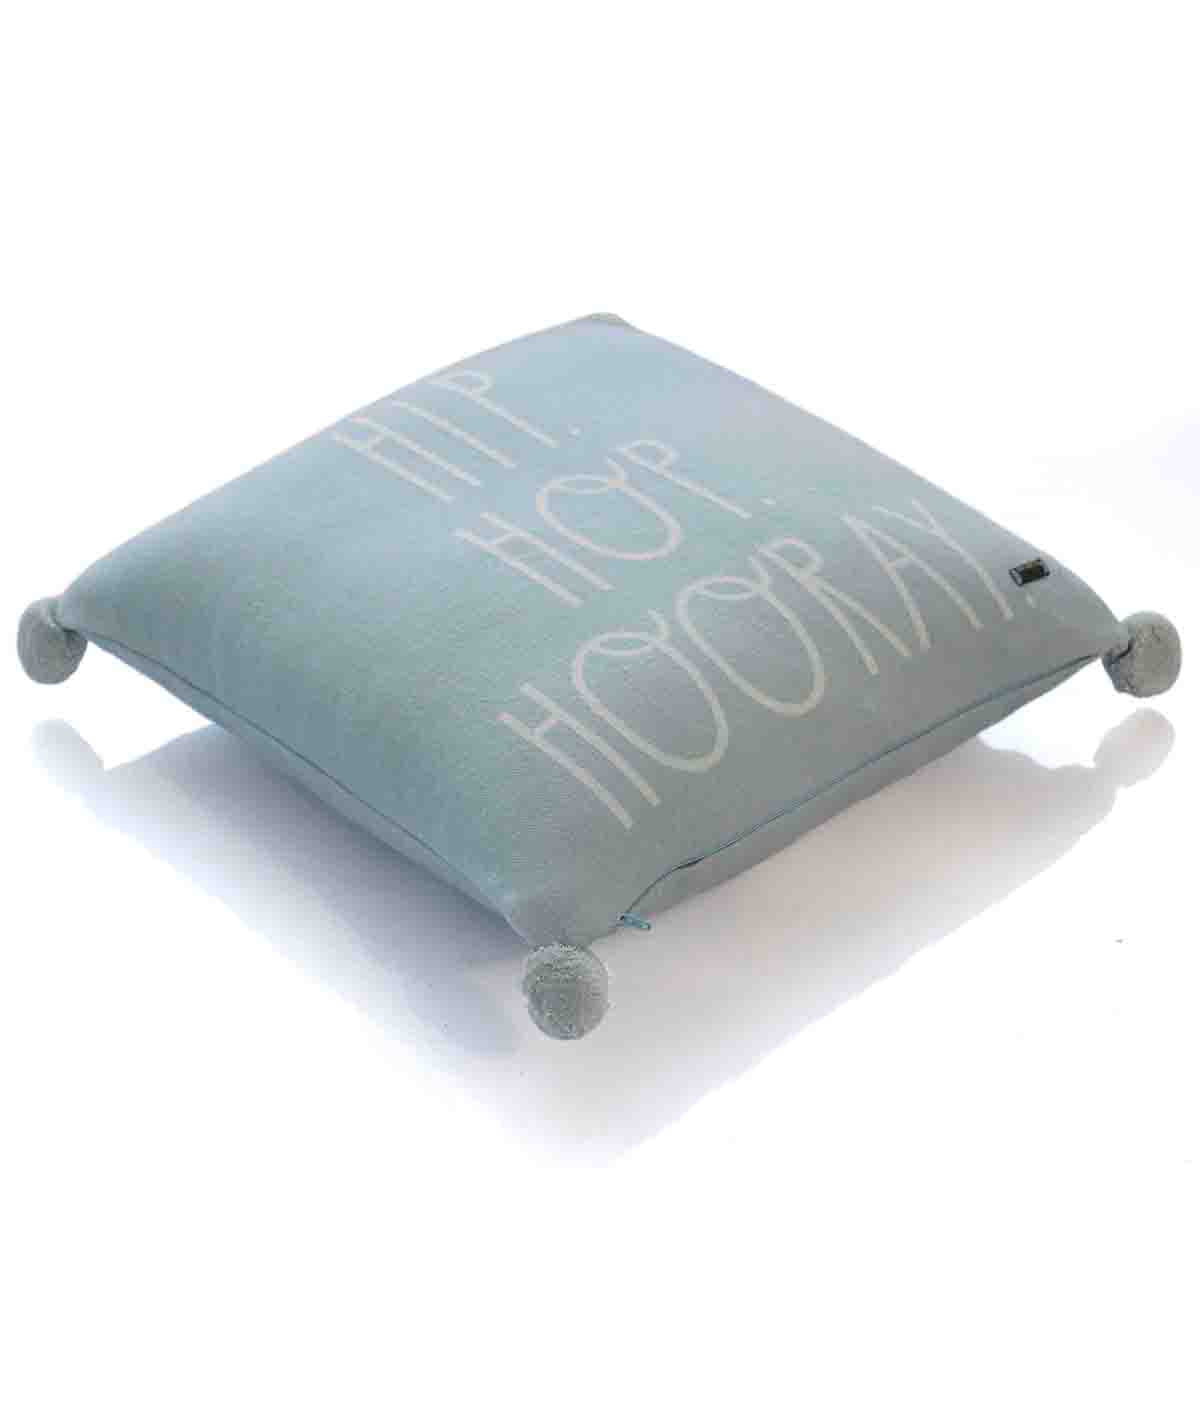 Hip Hop  Hooray Jacquard With Pom Pom Decorative Sky Blue & Natural Color 16 x 16 Inches Cushion Cover